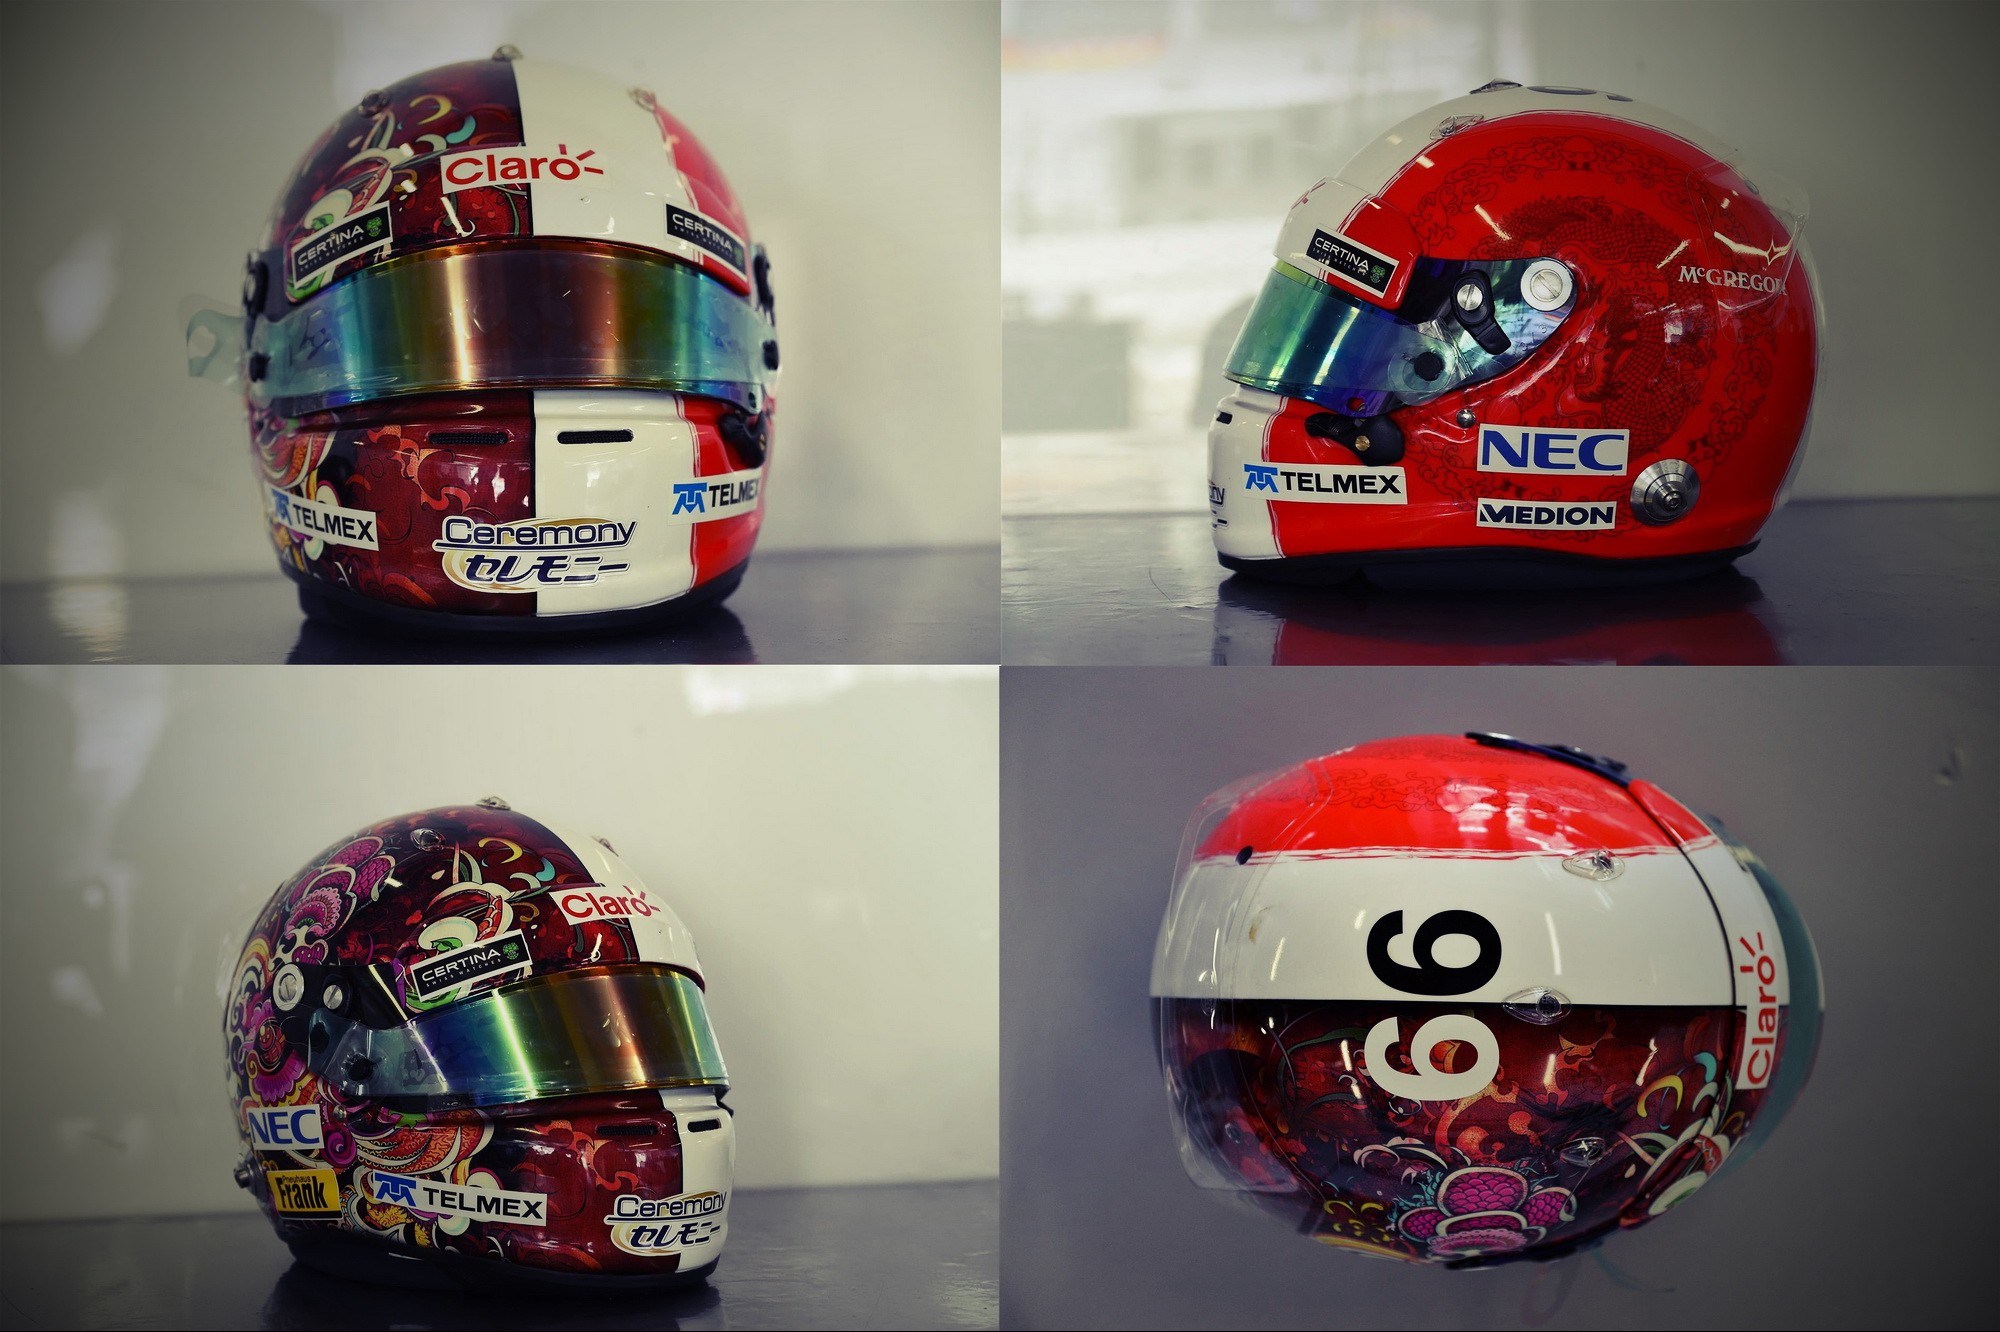 Шлем Адриана Сутиля на Гран-При Японии 2014 | 2014 Japanese Grand Prix helmet of Adrian Sutil